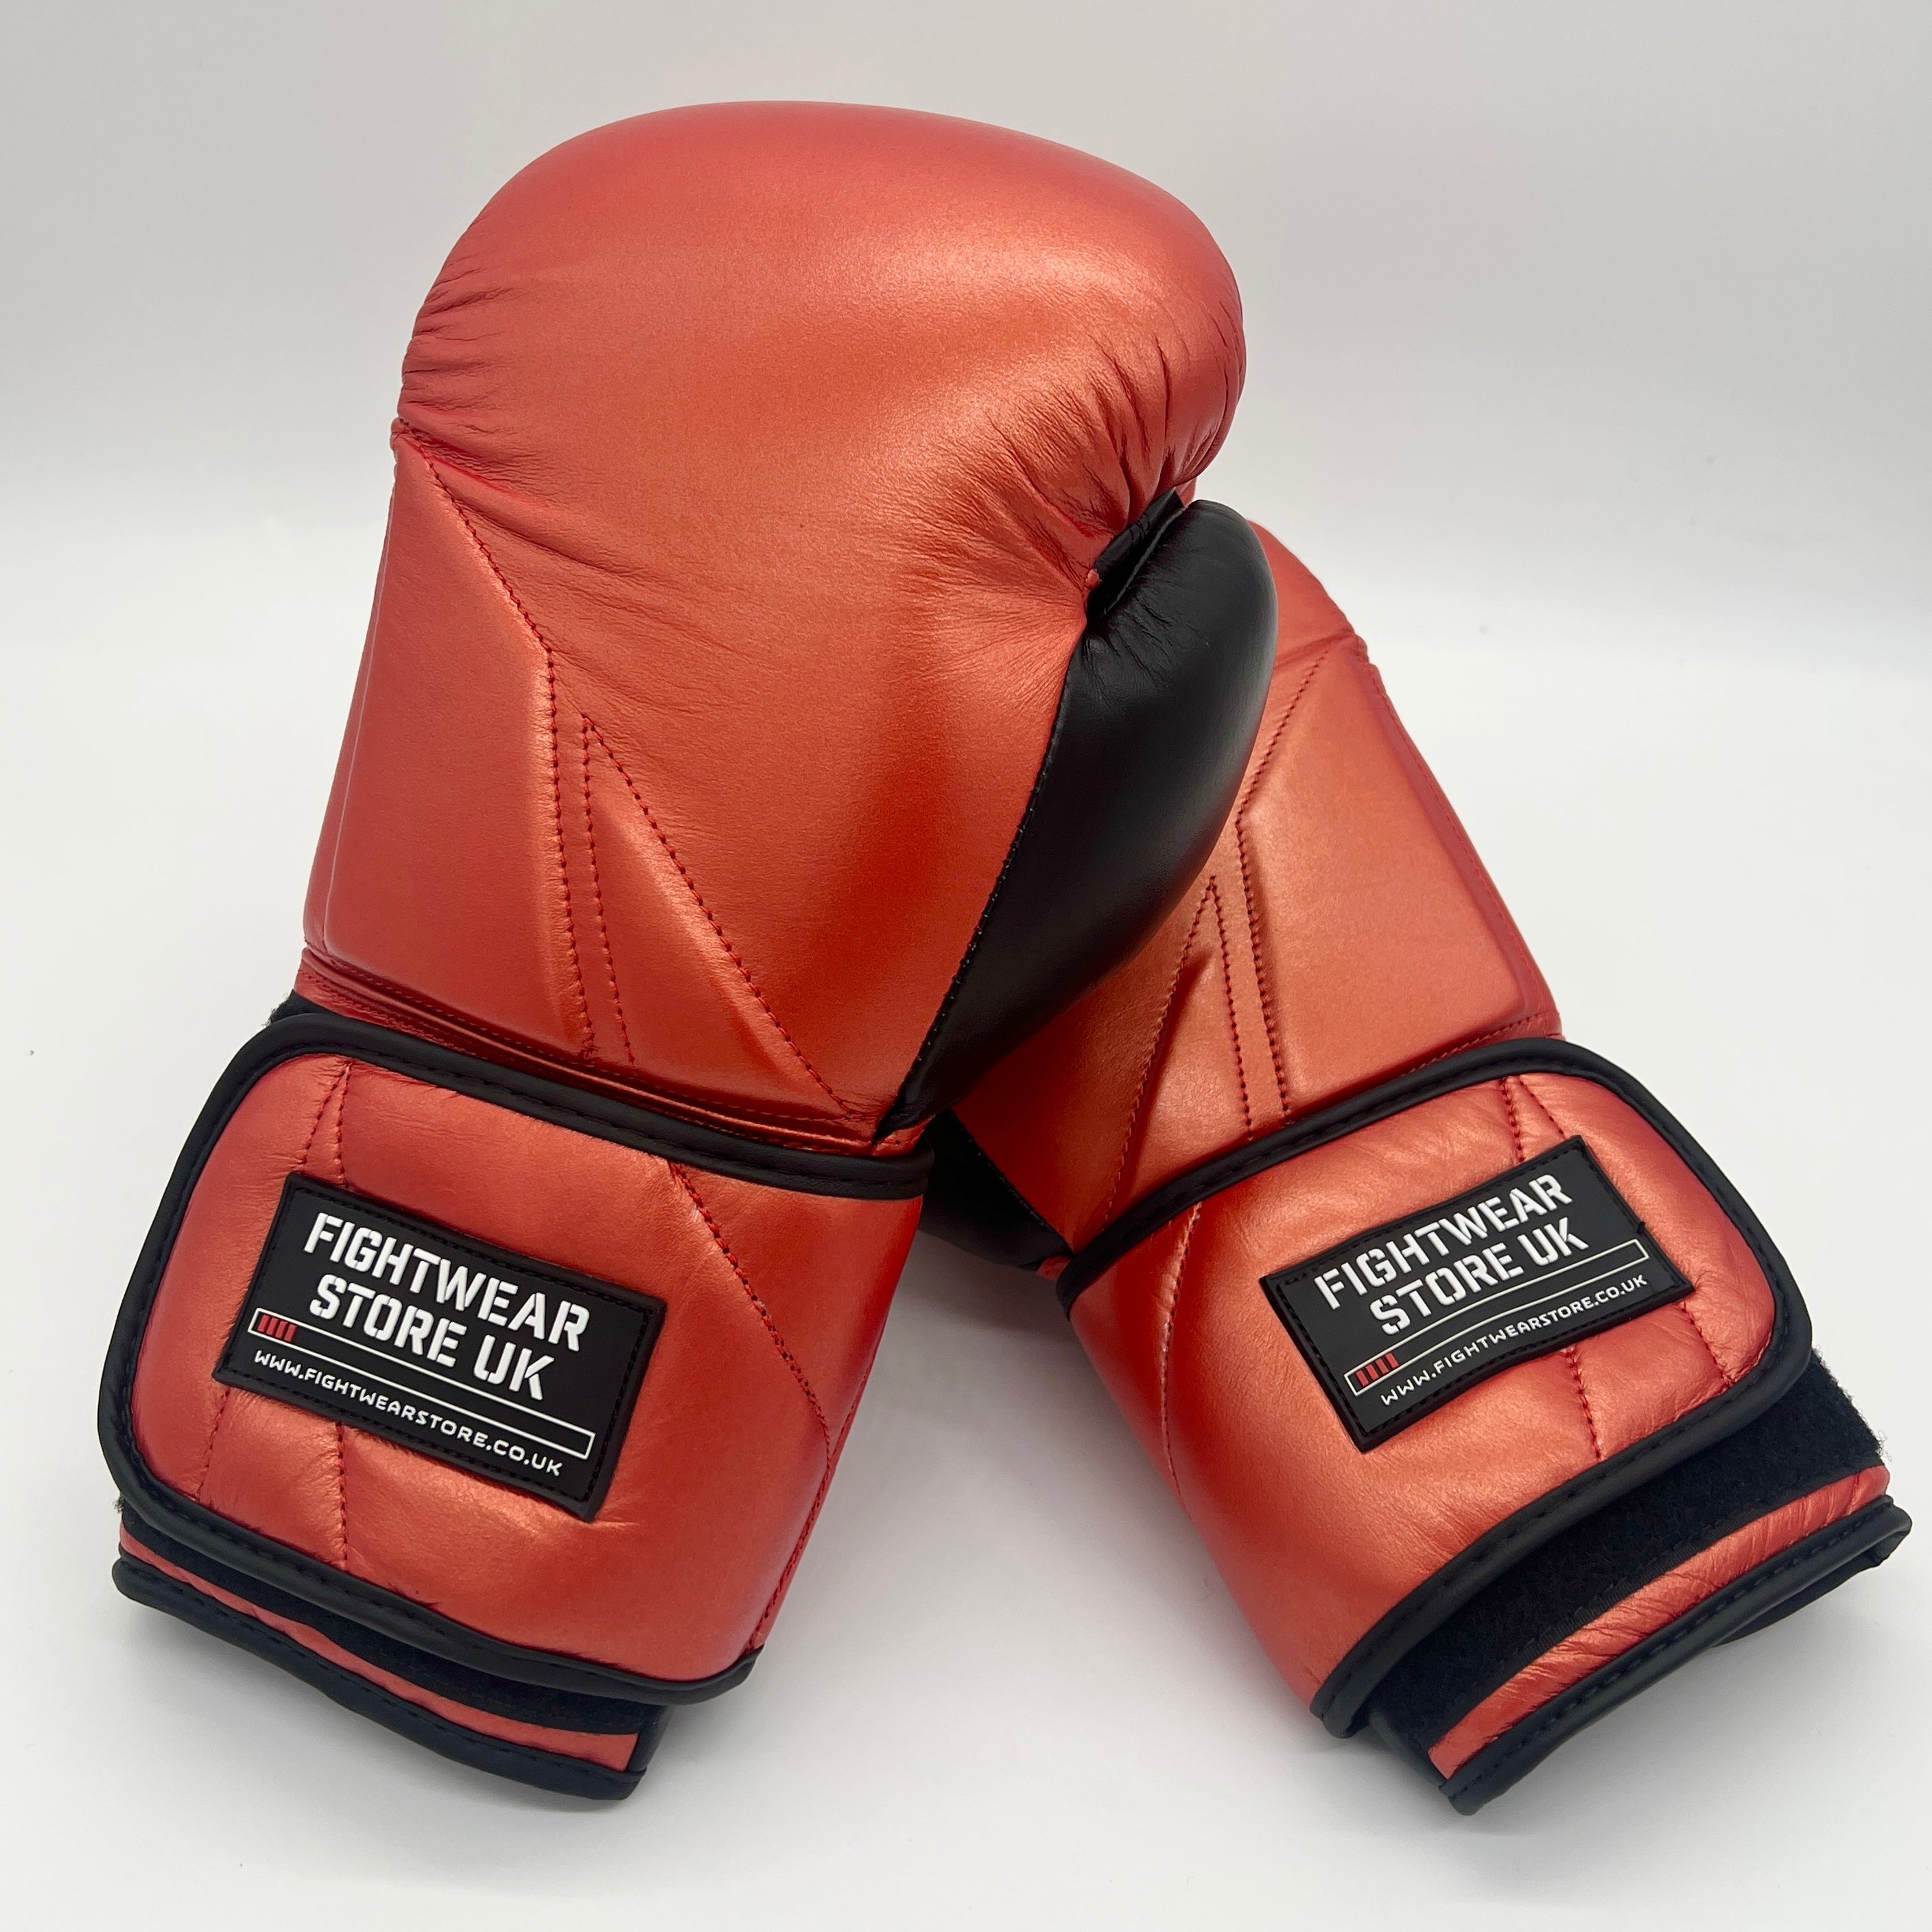 Fightwear Store UK Vesta: Metallic Red Boxing Gloves